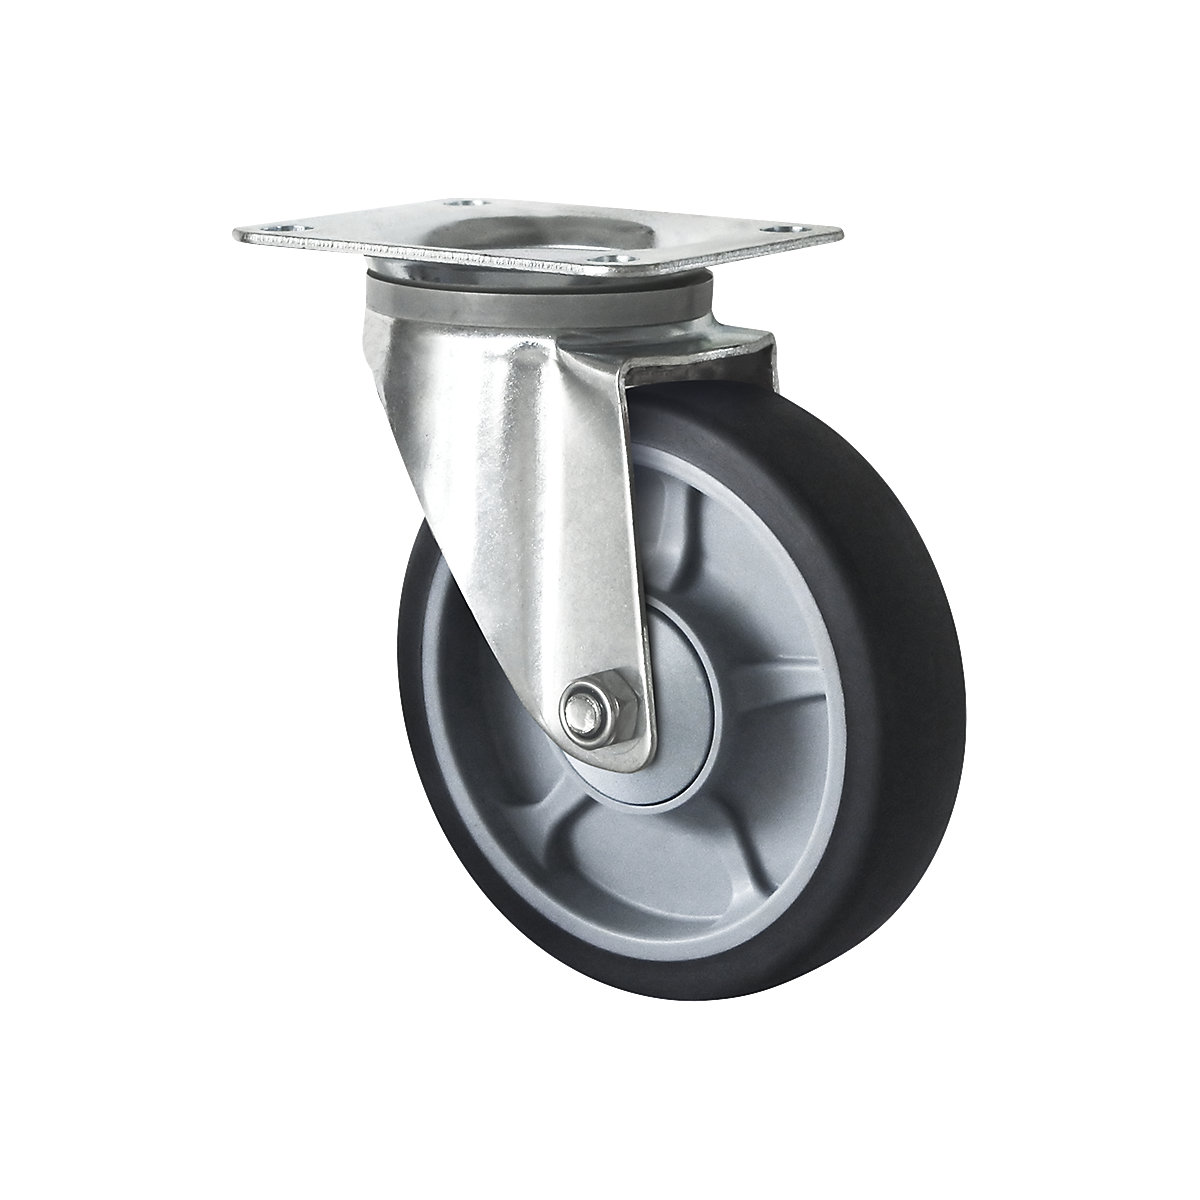 EUROKRAFTbasic – TPE tyres on PP rim, 2+ items, wheel Ø x width 160 x 40 mm, swivel castor